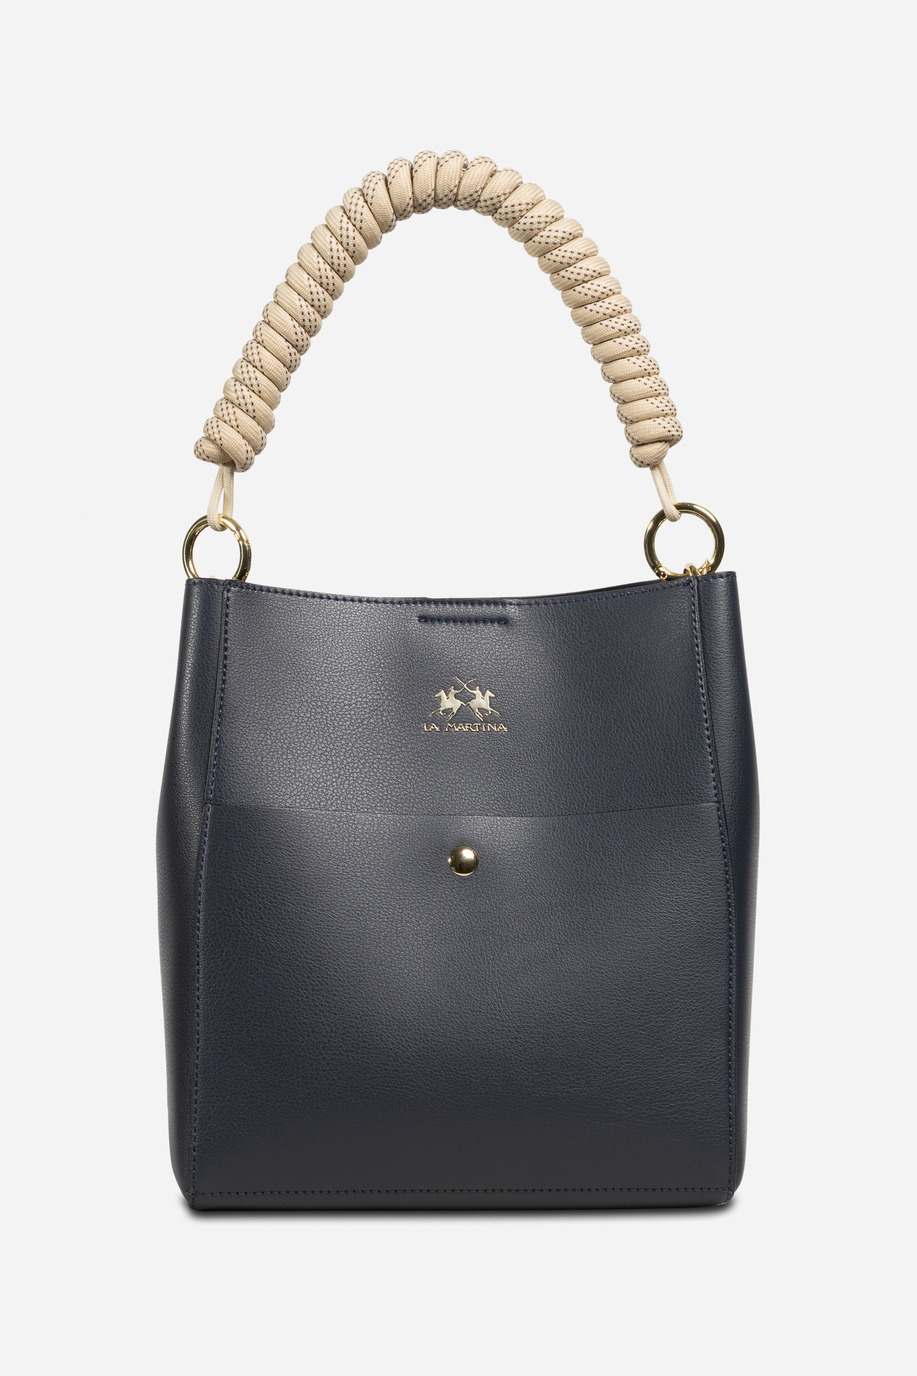 Shopping Bag Donna In Pu - Accessori | La Martina - Official Online Shop